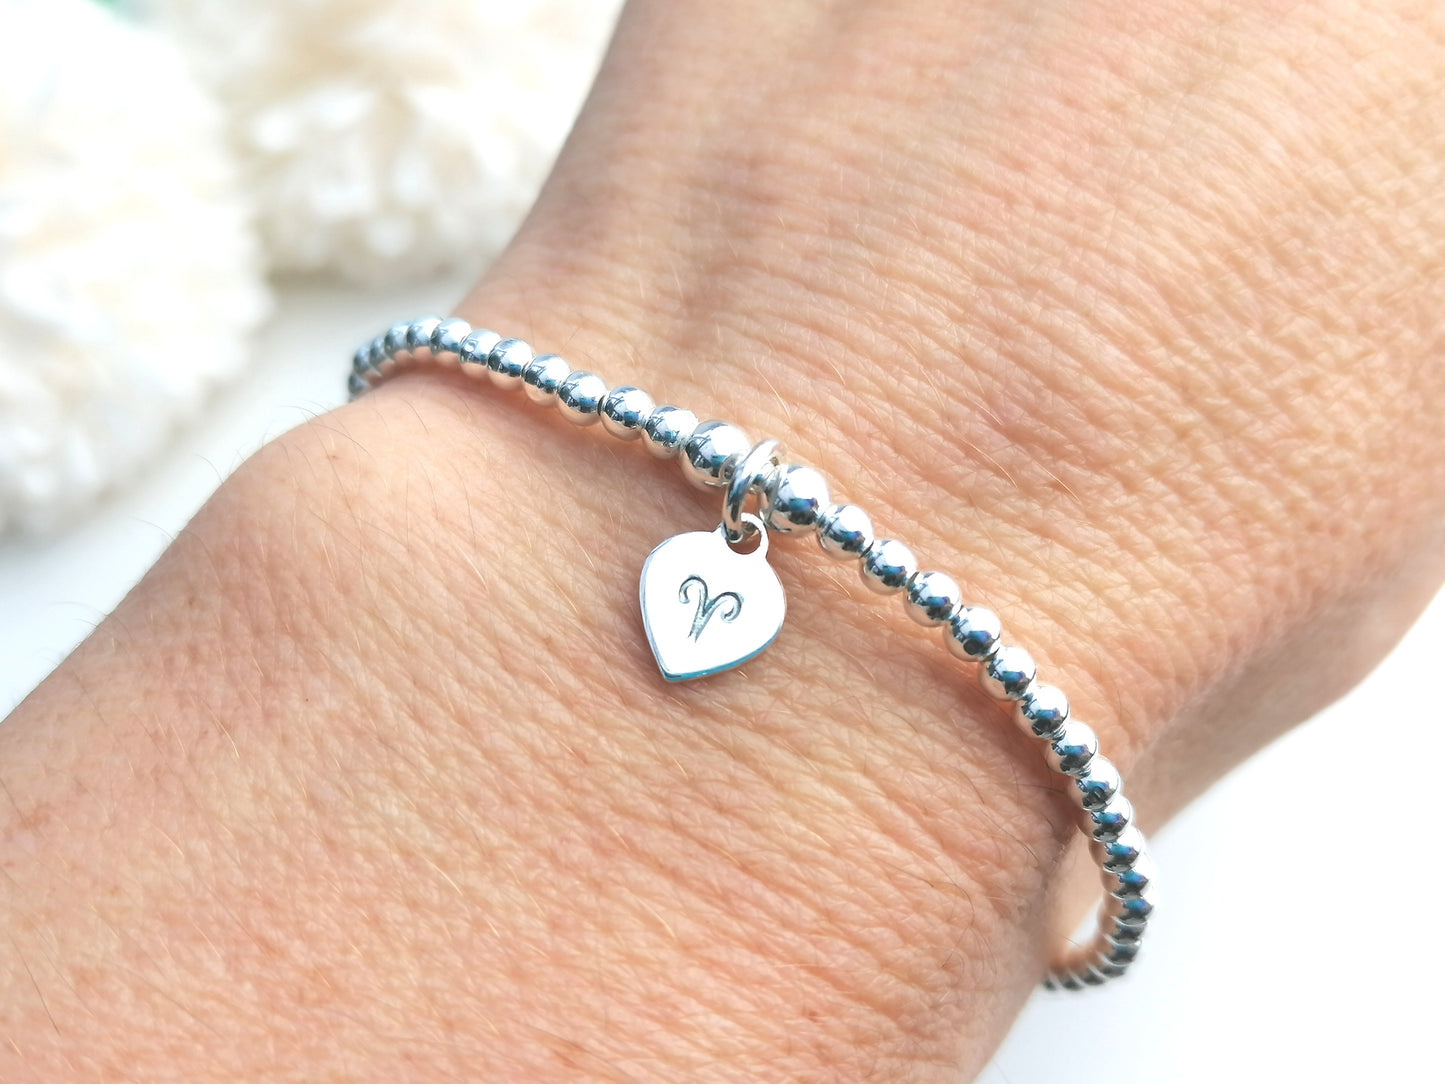 Zodiac bracelet in sterling silver. Zodiac sign bracelet. Sterling silver bead bracelet.